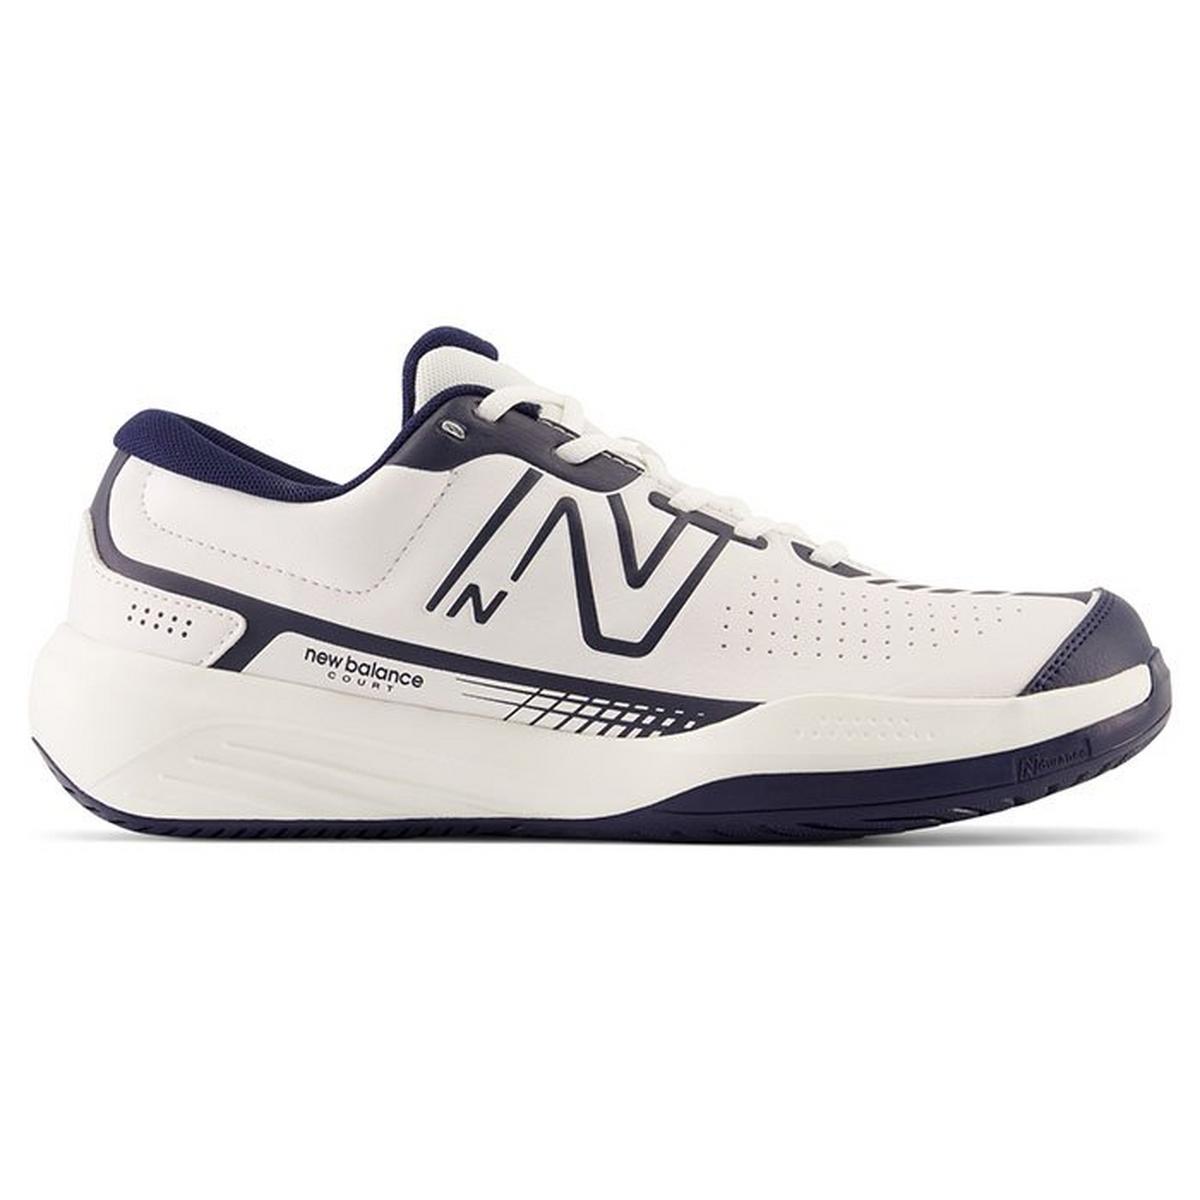 Men's 696v5 Tennis Shoe